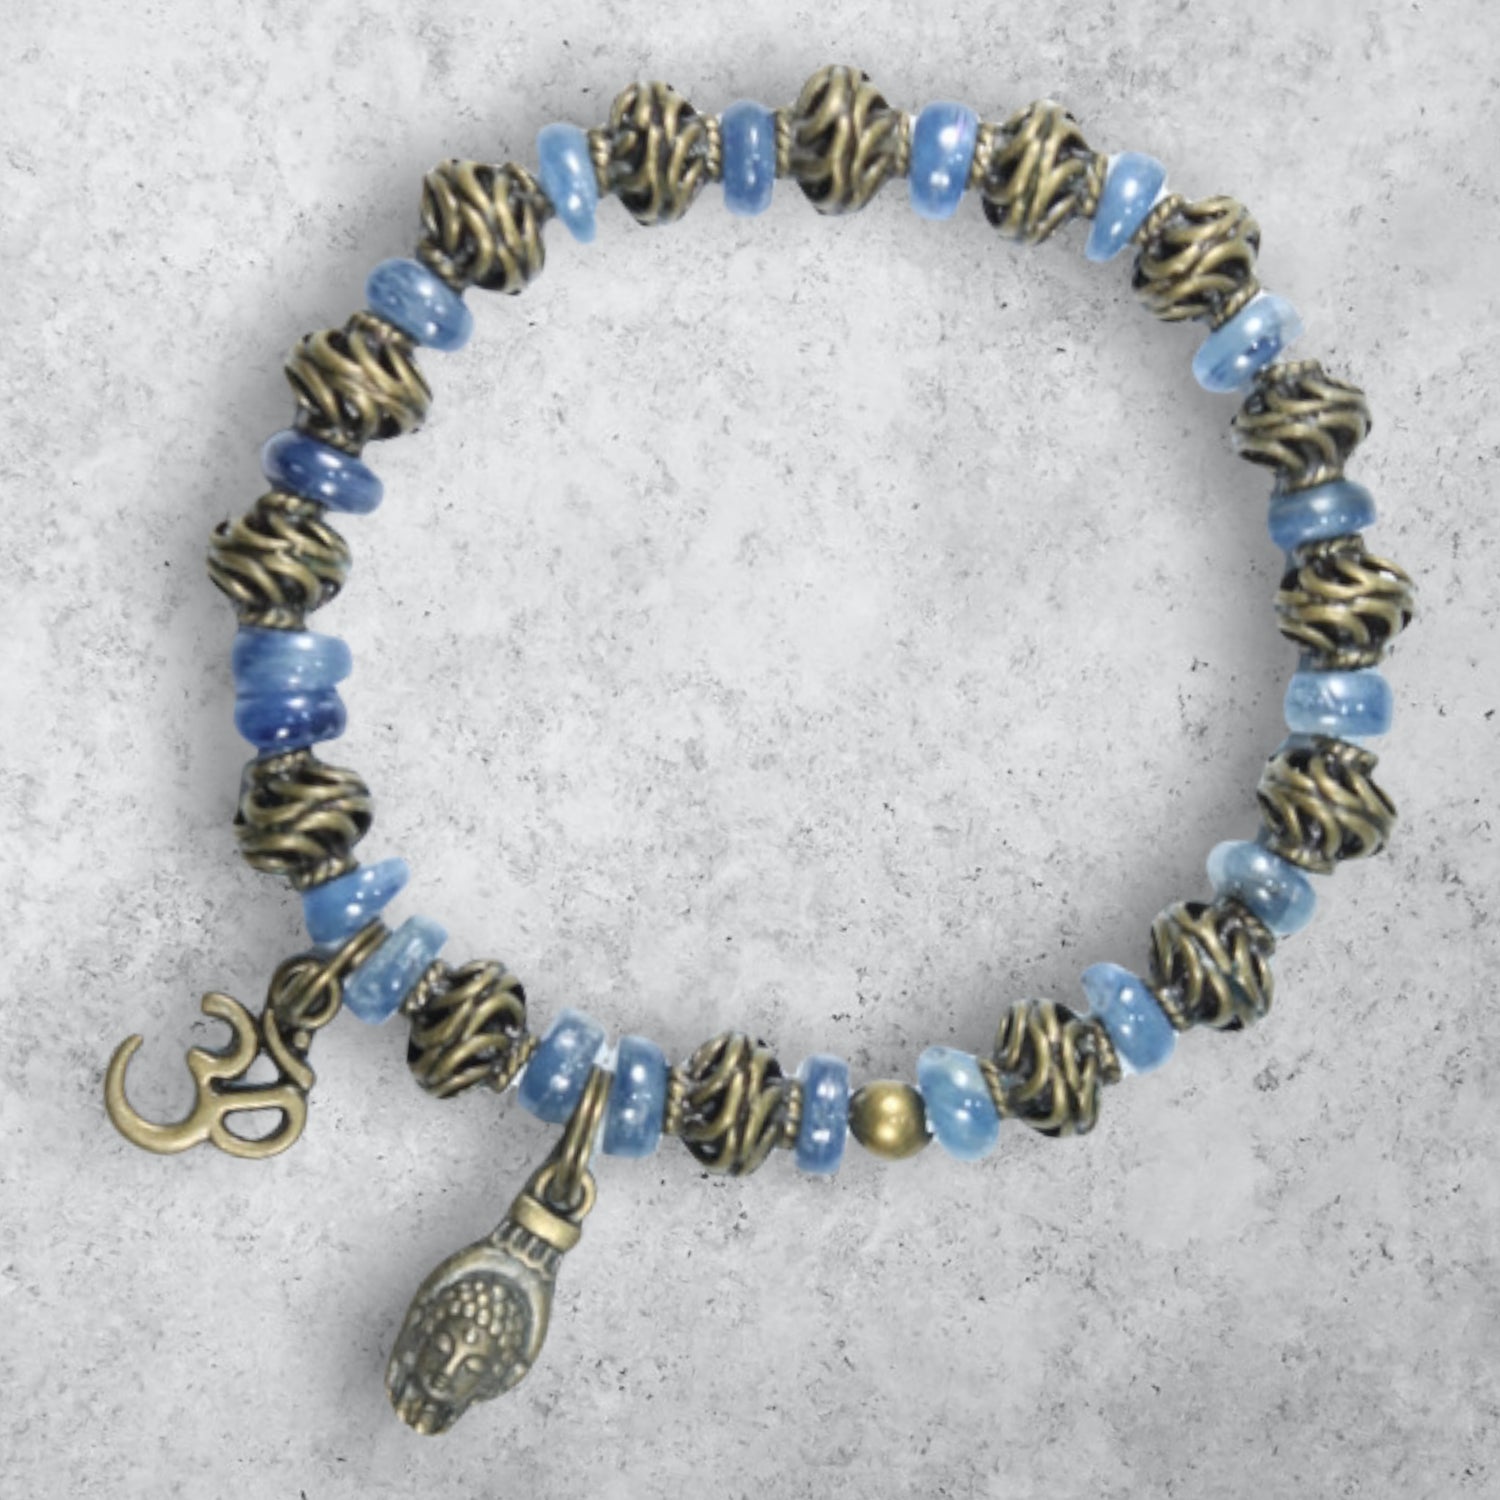 Healing crystal chakra stone blue kyanite yoga charm stretch stack bracelet 